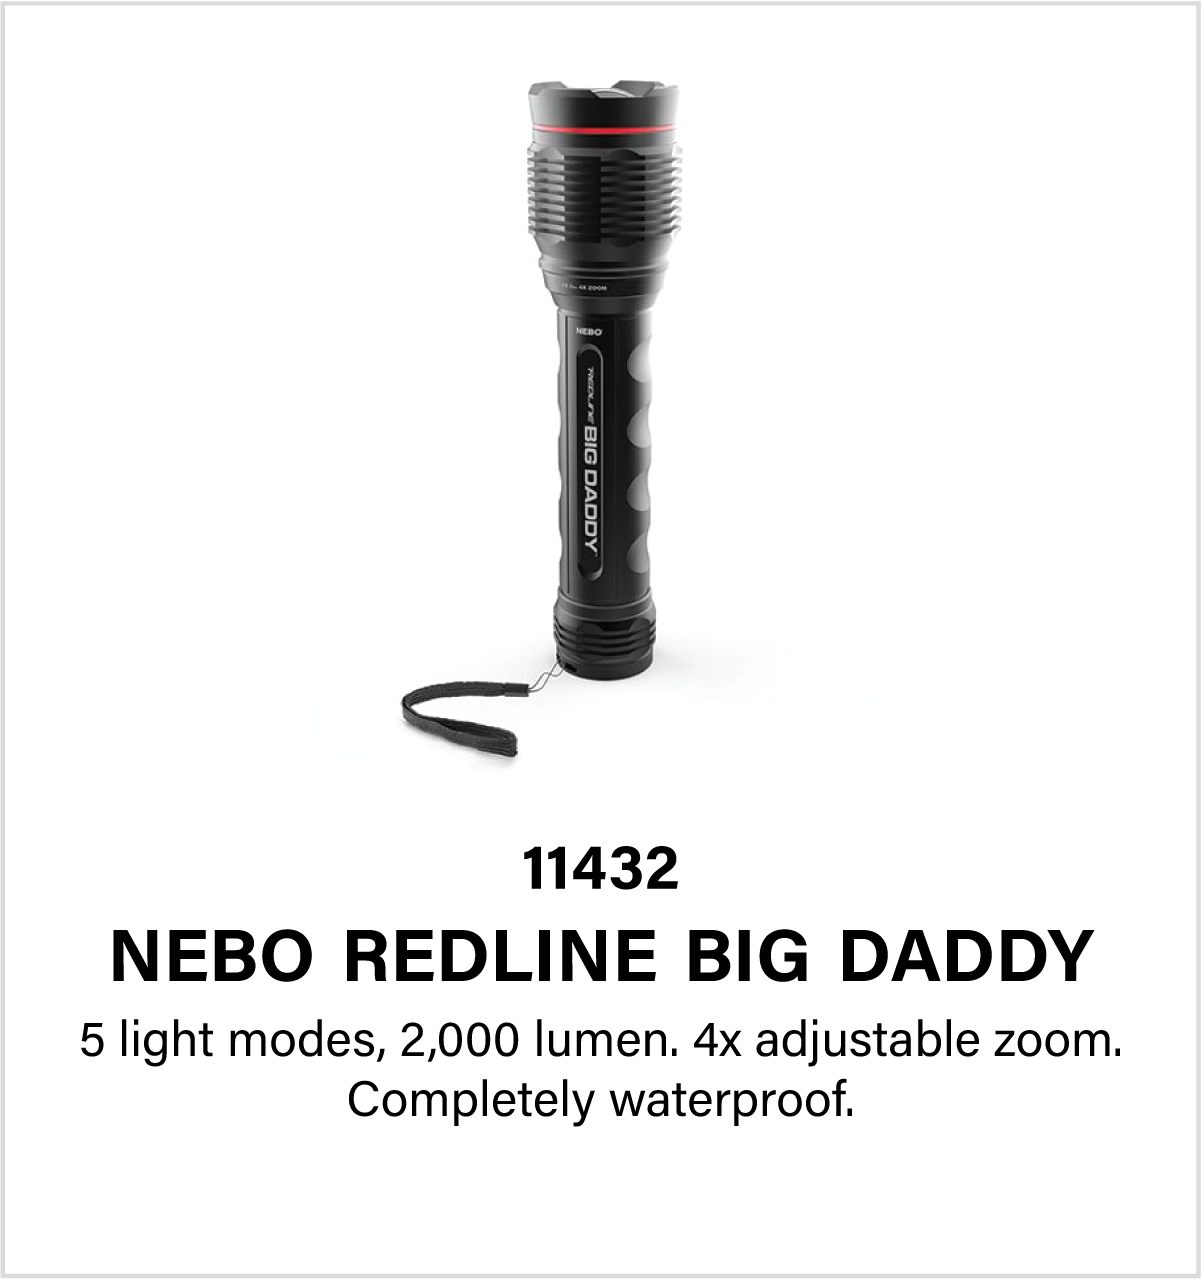 Winter Safety_Redline Big Daddy